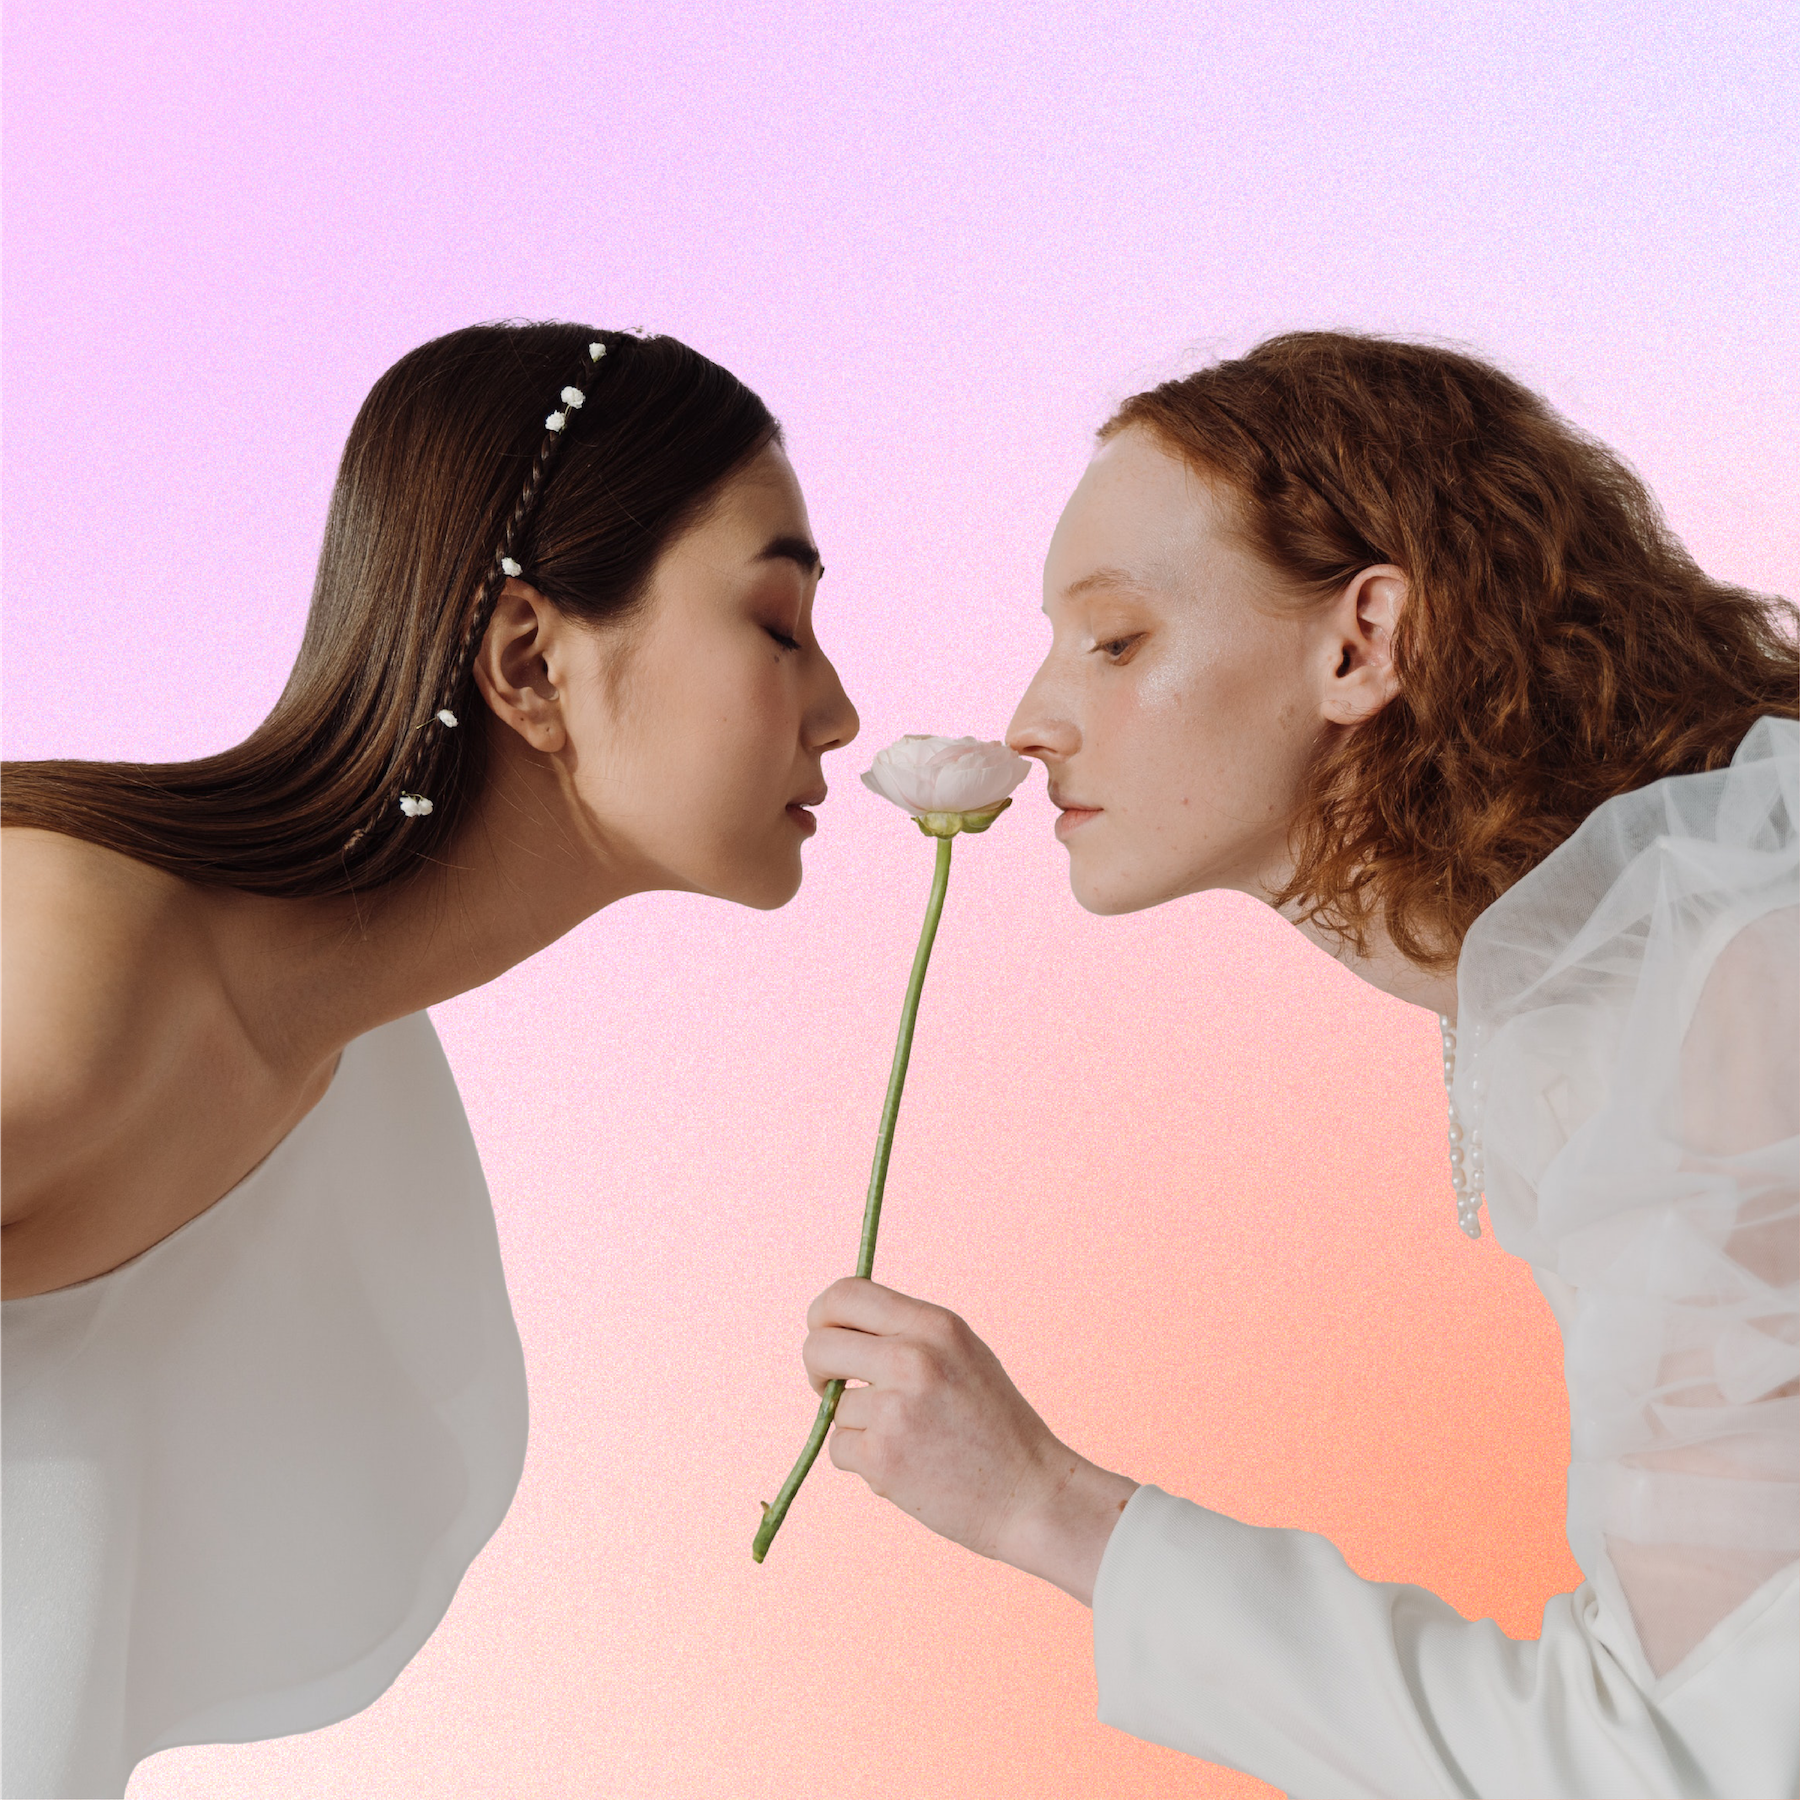 two women smelling a flower